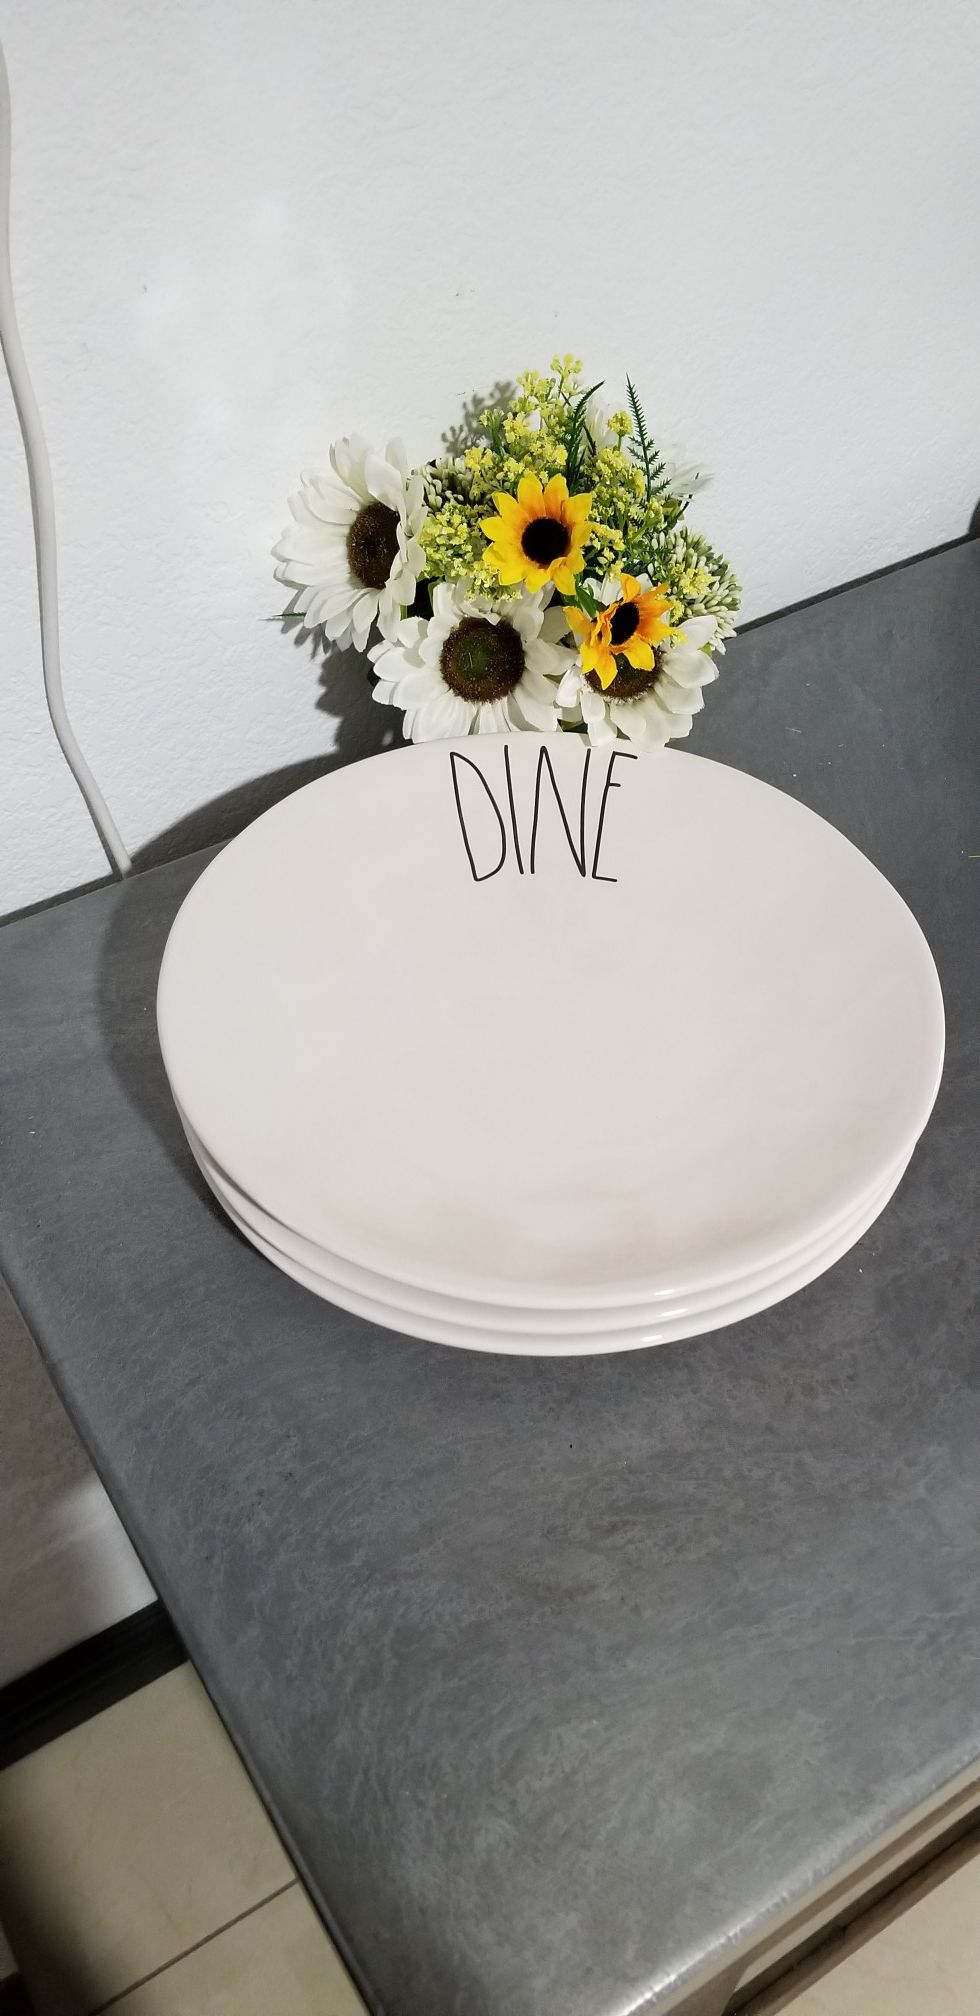 Rae Dunn DINE dinner plates / farmhouse decor kitchen home